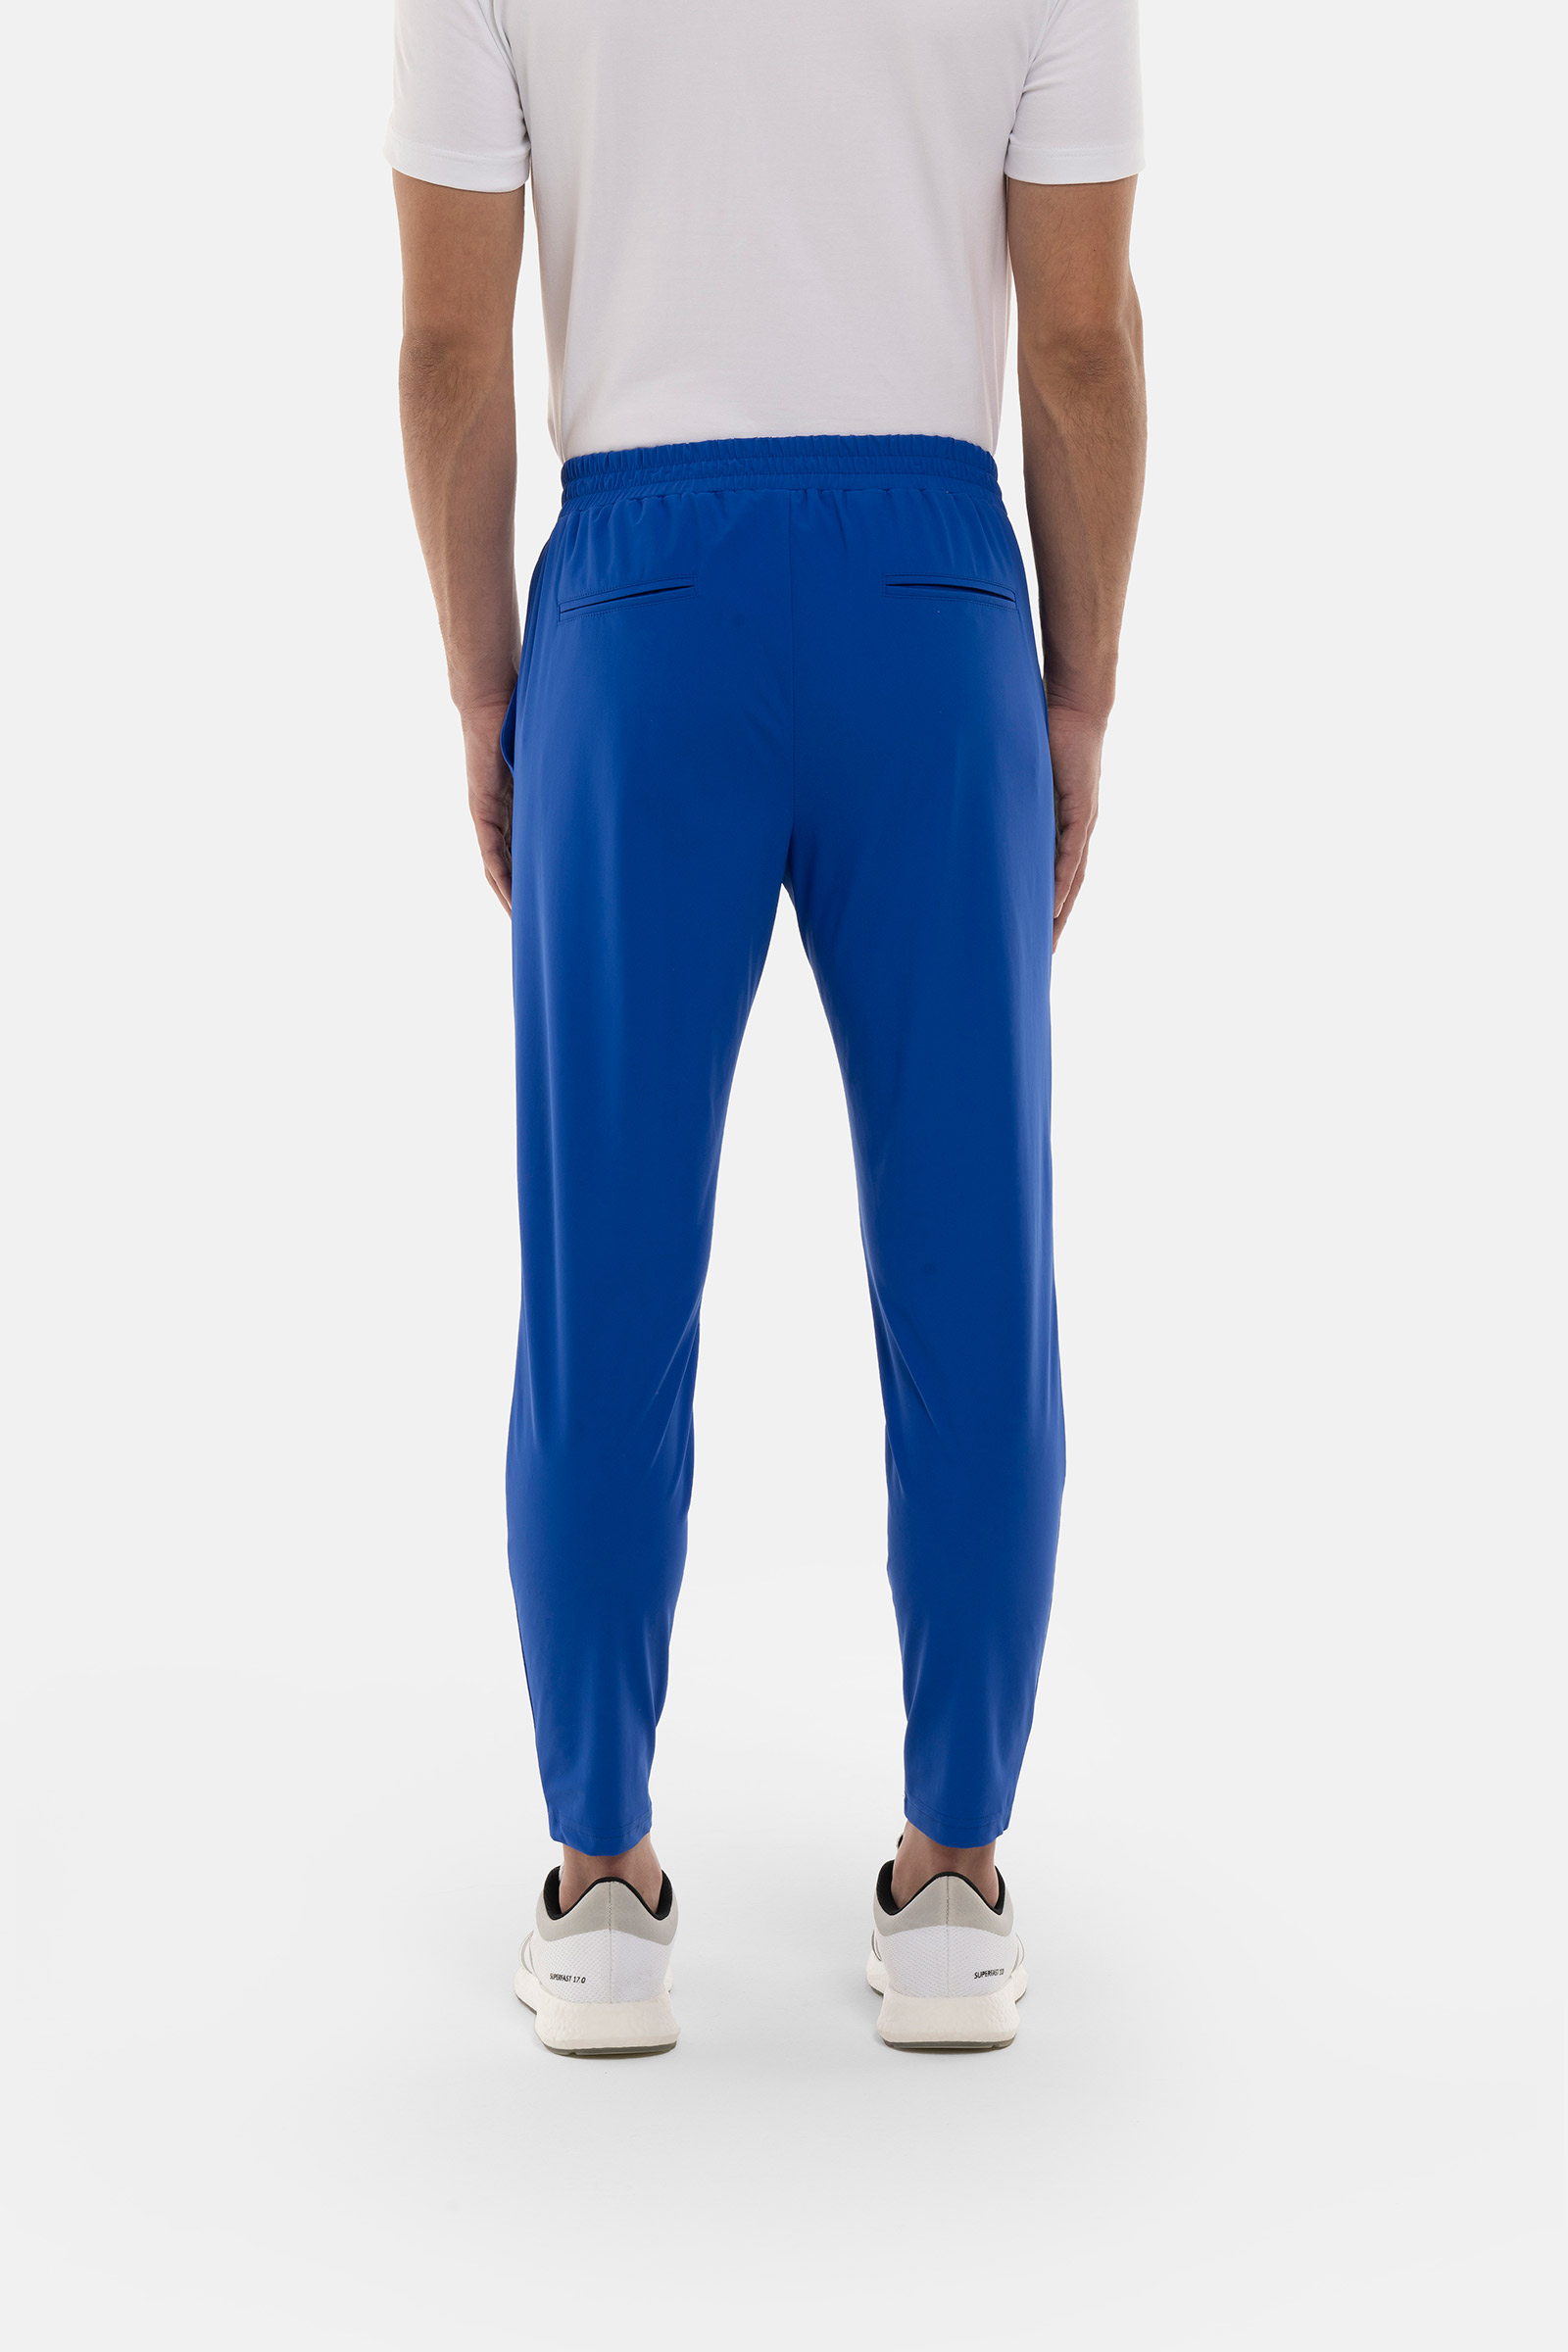 FUTURE LAB CLASSIC PANTS - BLUE - Hydrogen - Luxury Sportwear